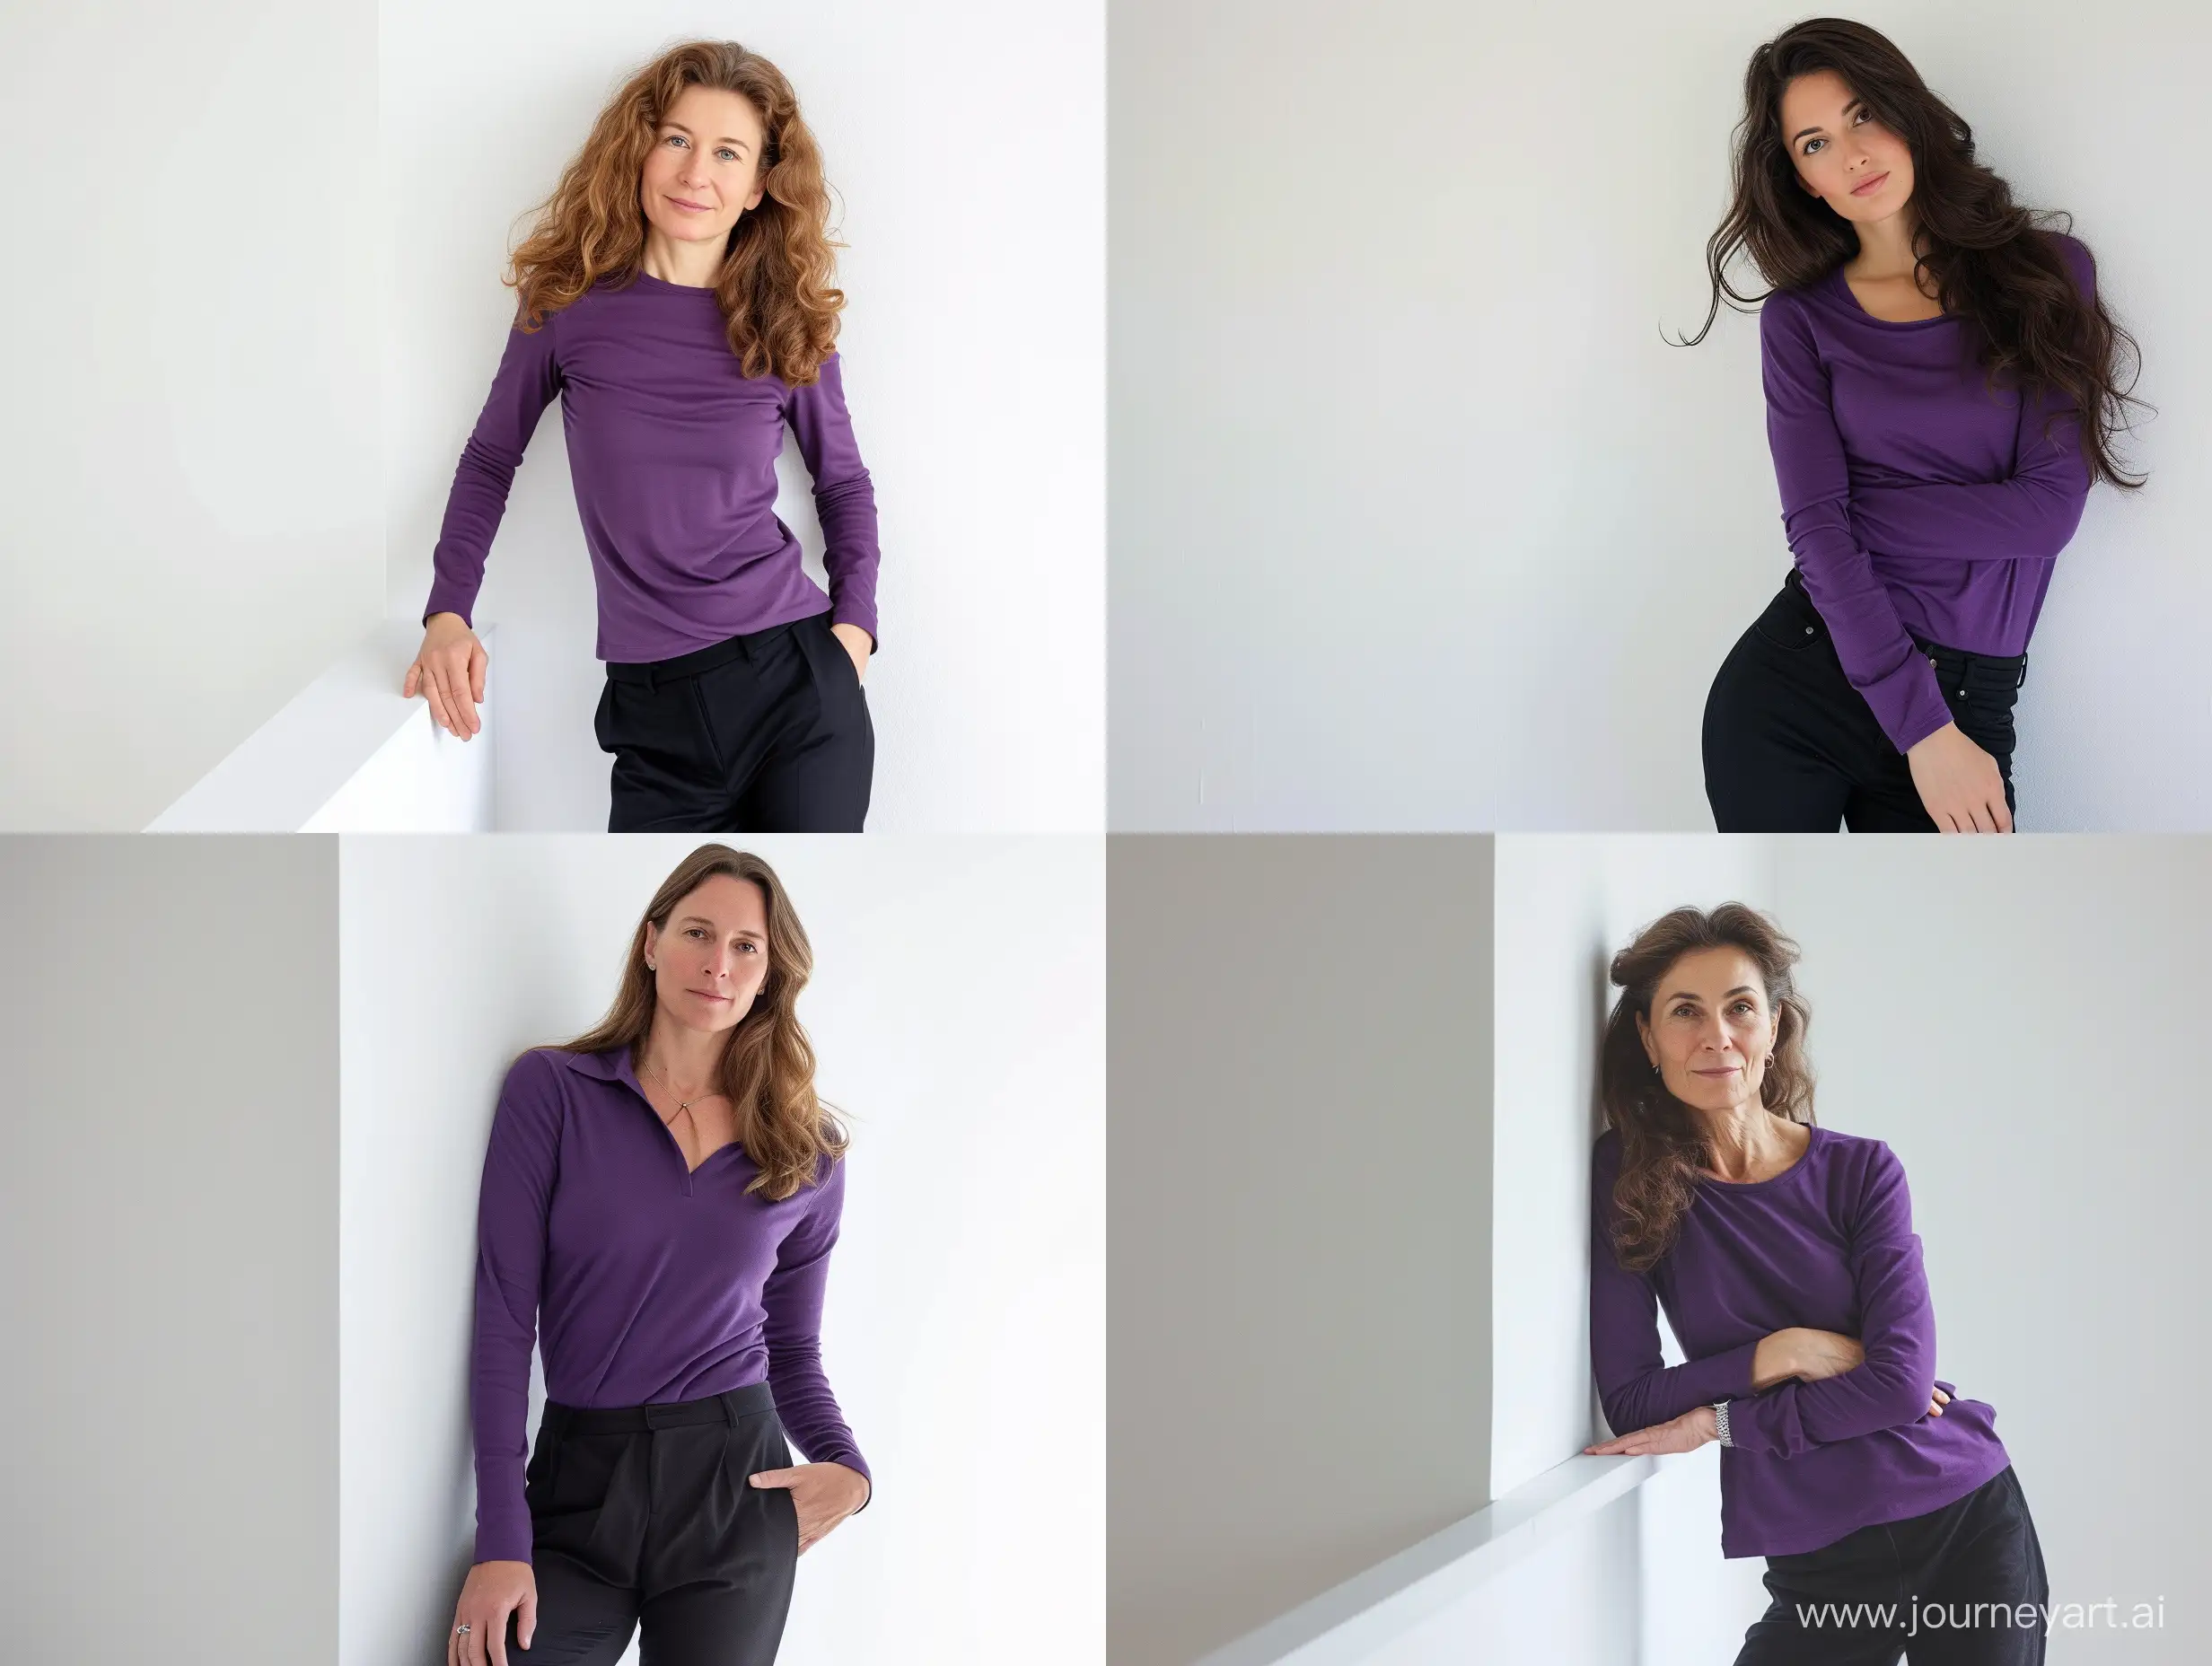 Confident-Women-in-Stylish-Purple-Attire-Leaning-on-White-Wall-Portrait